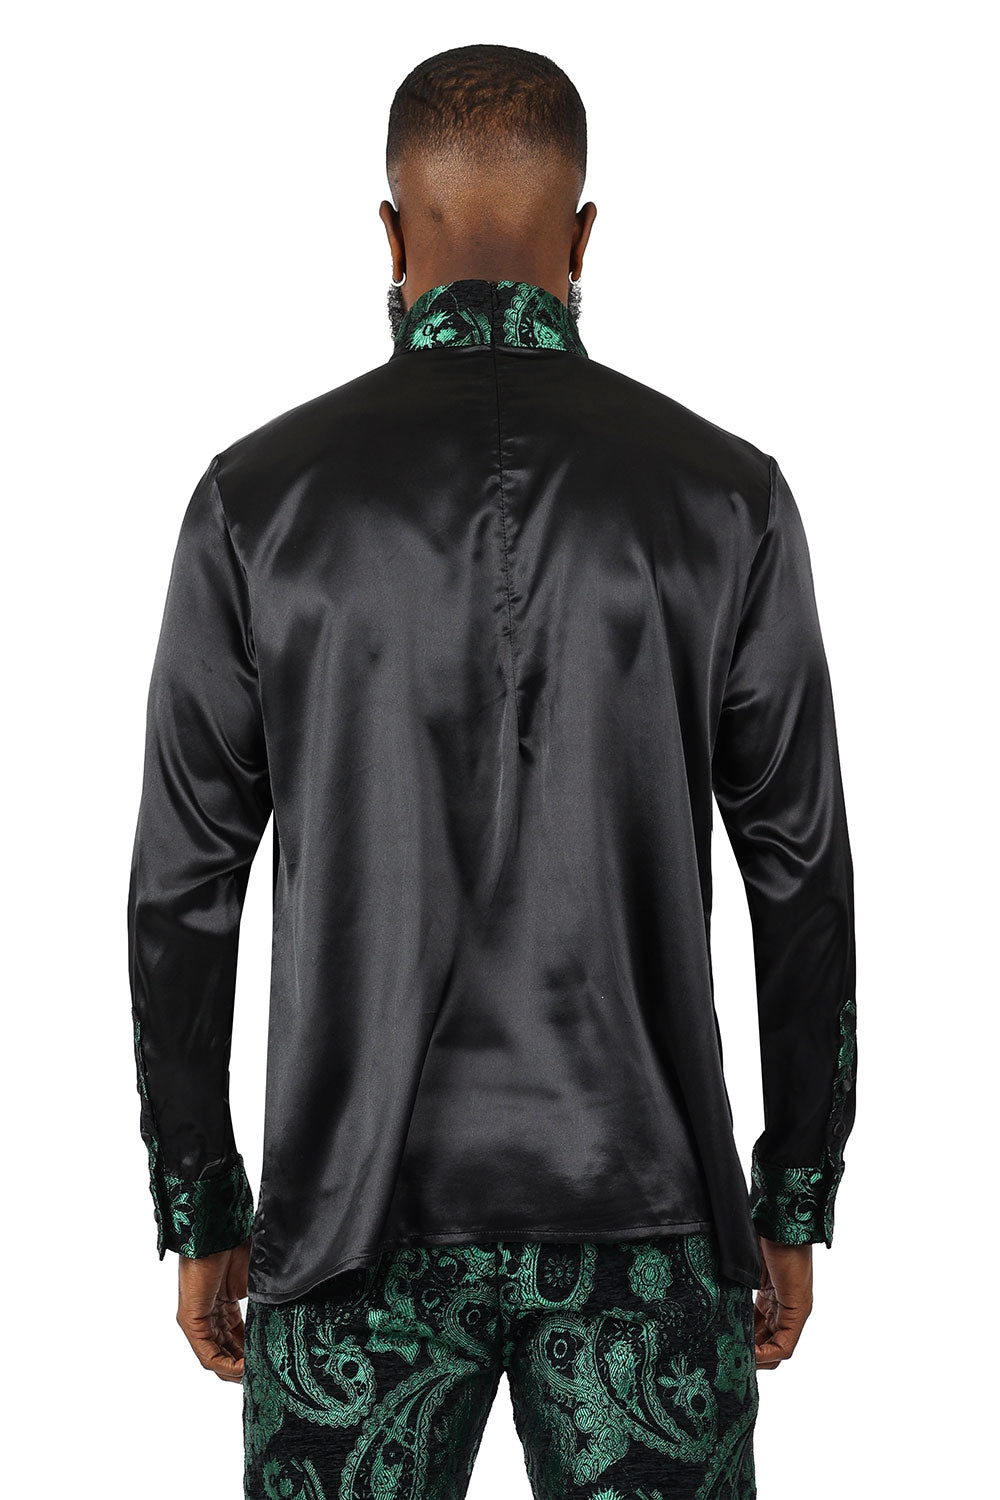 BARABAS Men's Paisley Long Sleeve Turtle Neck shirt 3MT05 Green